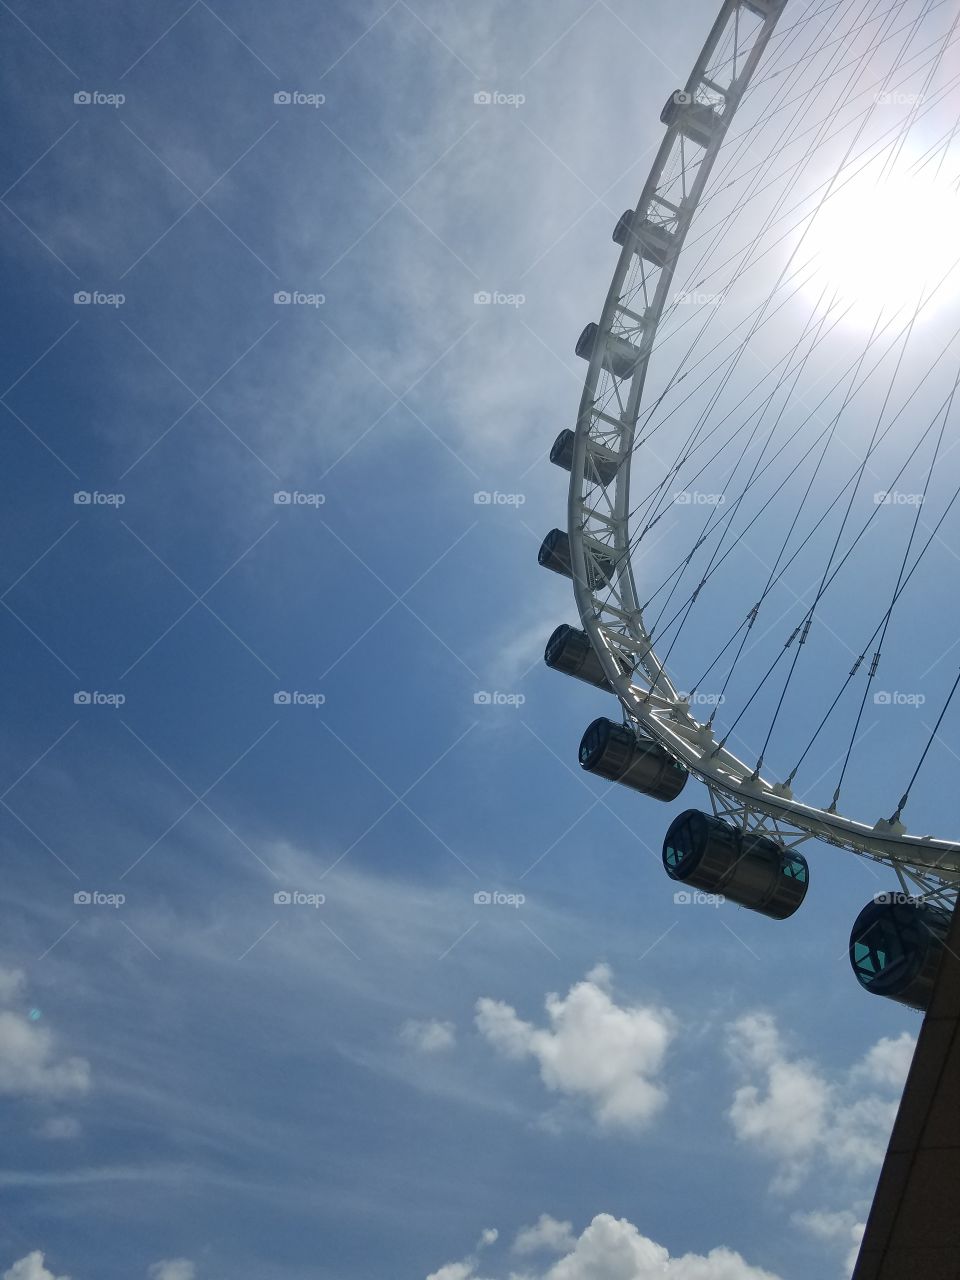 Singapore Ferris Wheel